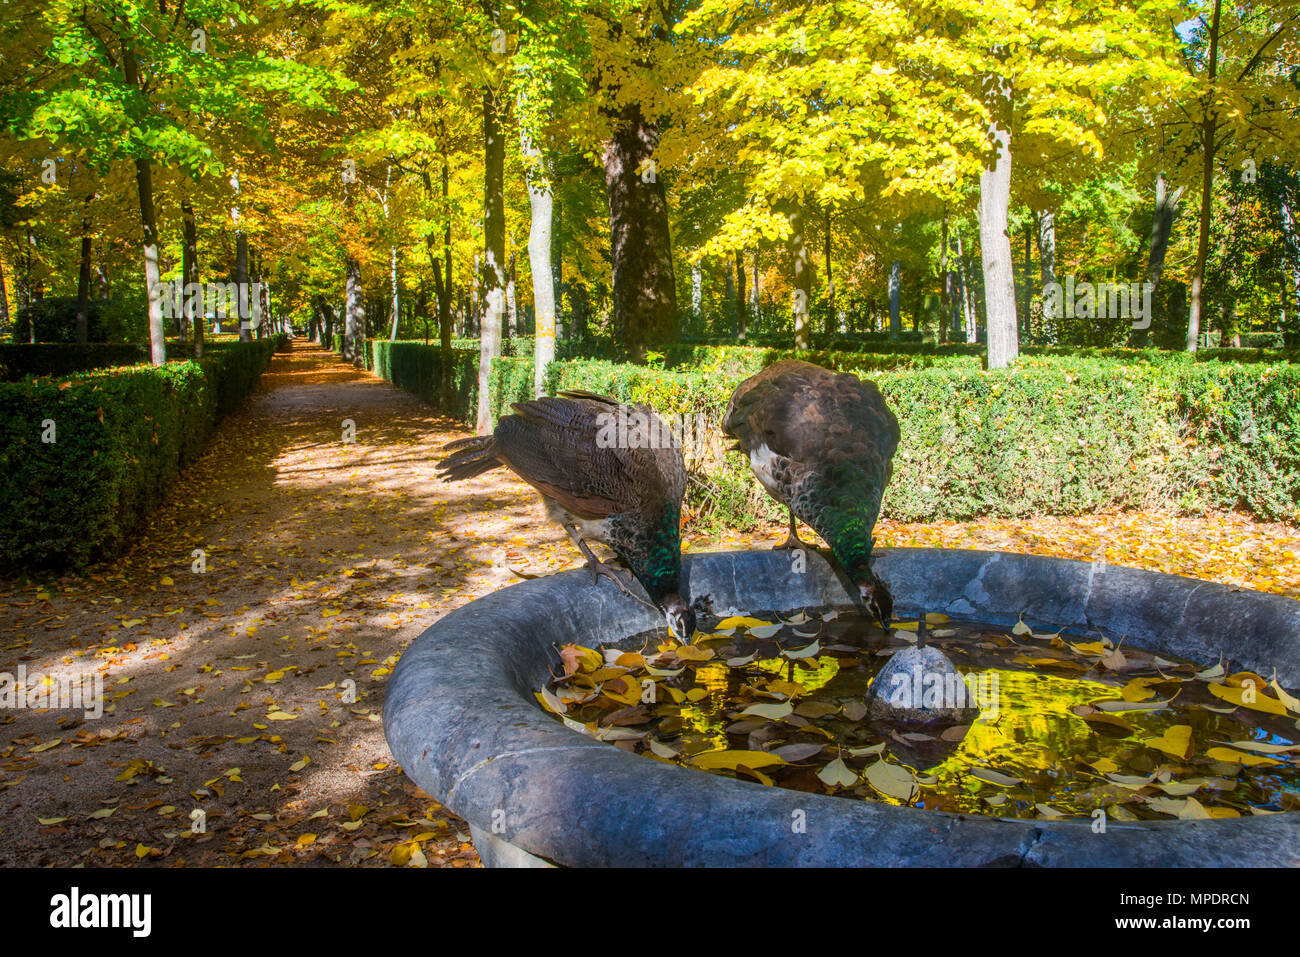 Two female peacocks drinking in a fountain. La Isla gardens, Aranjuez, Madrid province, Spain. Stock Photo